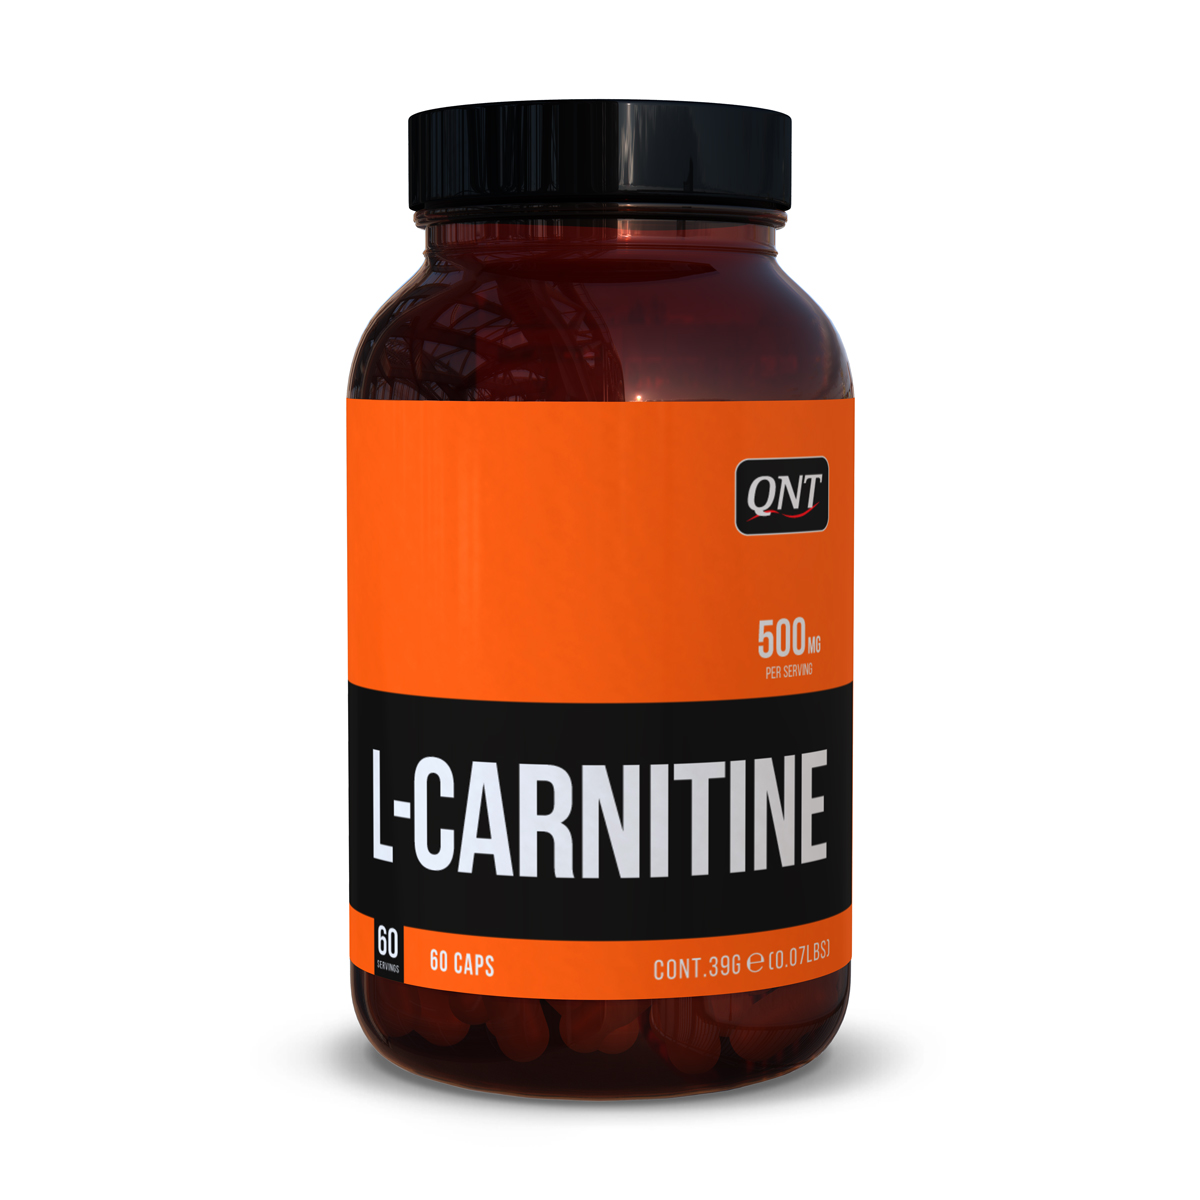 L-Carnitina - L-CARNITINE 60 capsule
, advancednutrition.ro